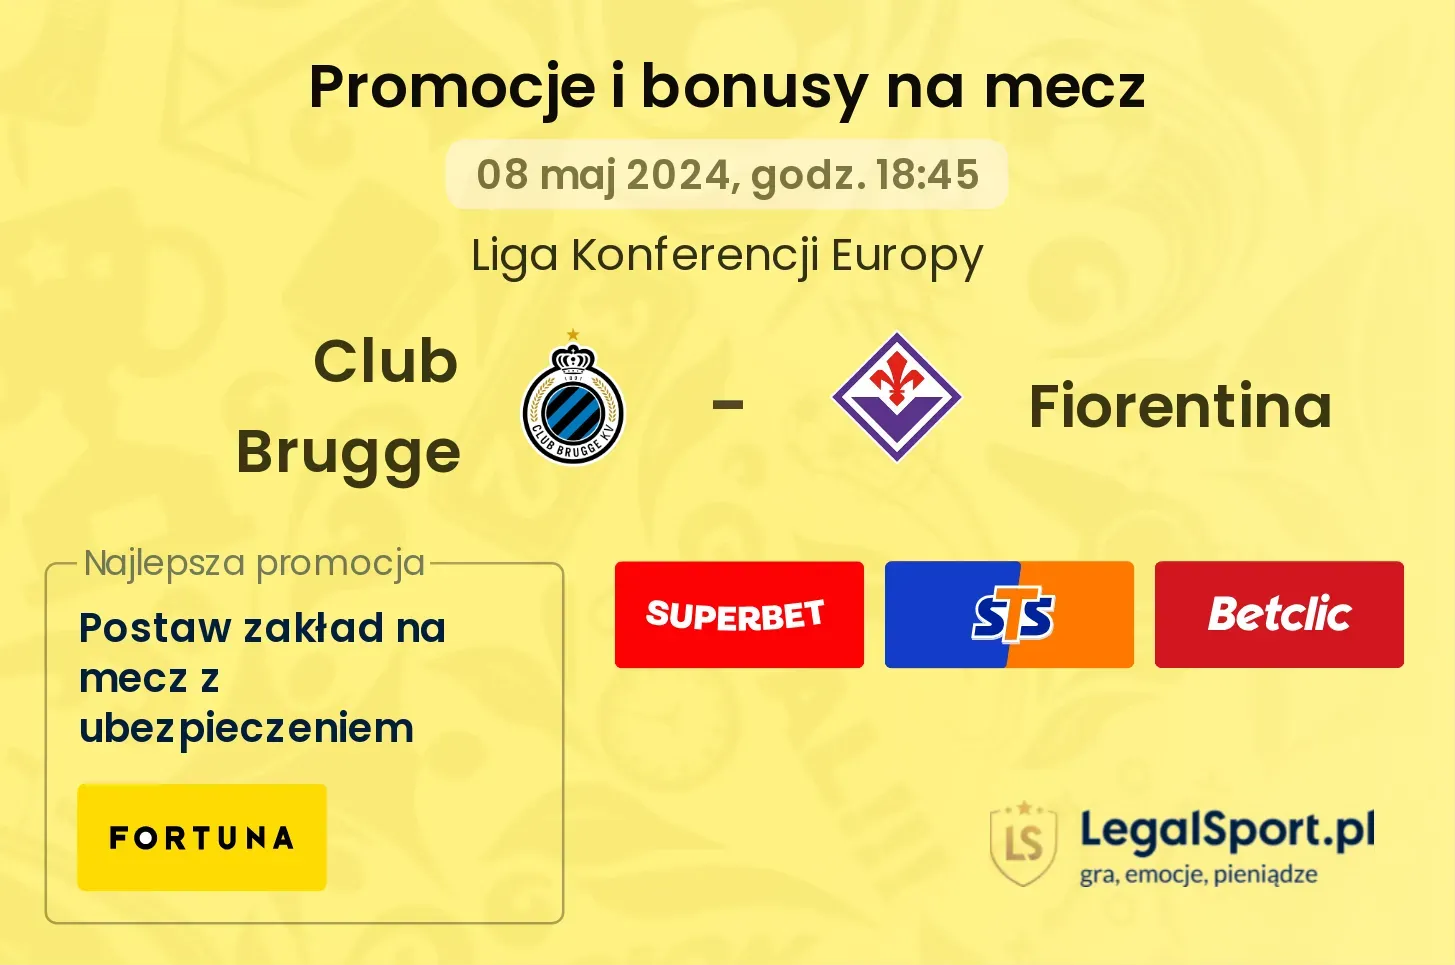 Club Brugge - Fiorentina promocje bonusy na mecz